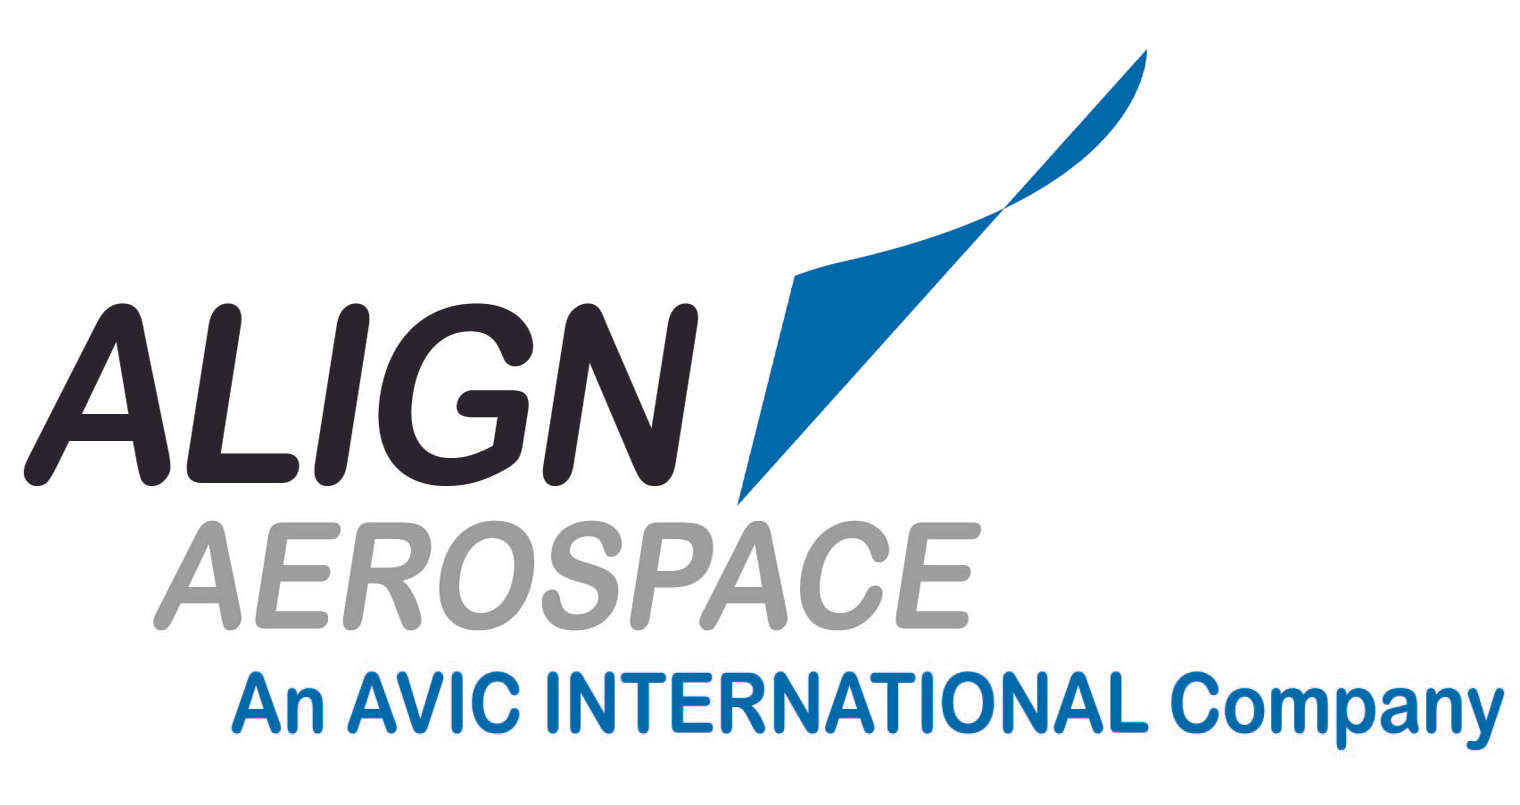 Align Aerospace - Crunchbase Company Profile & Funding